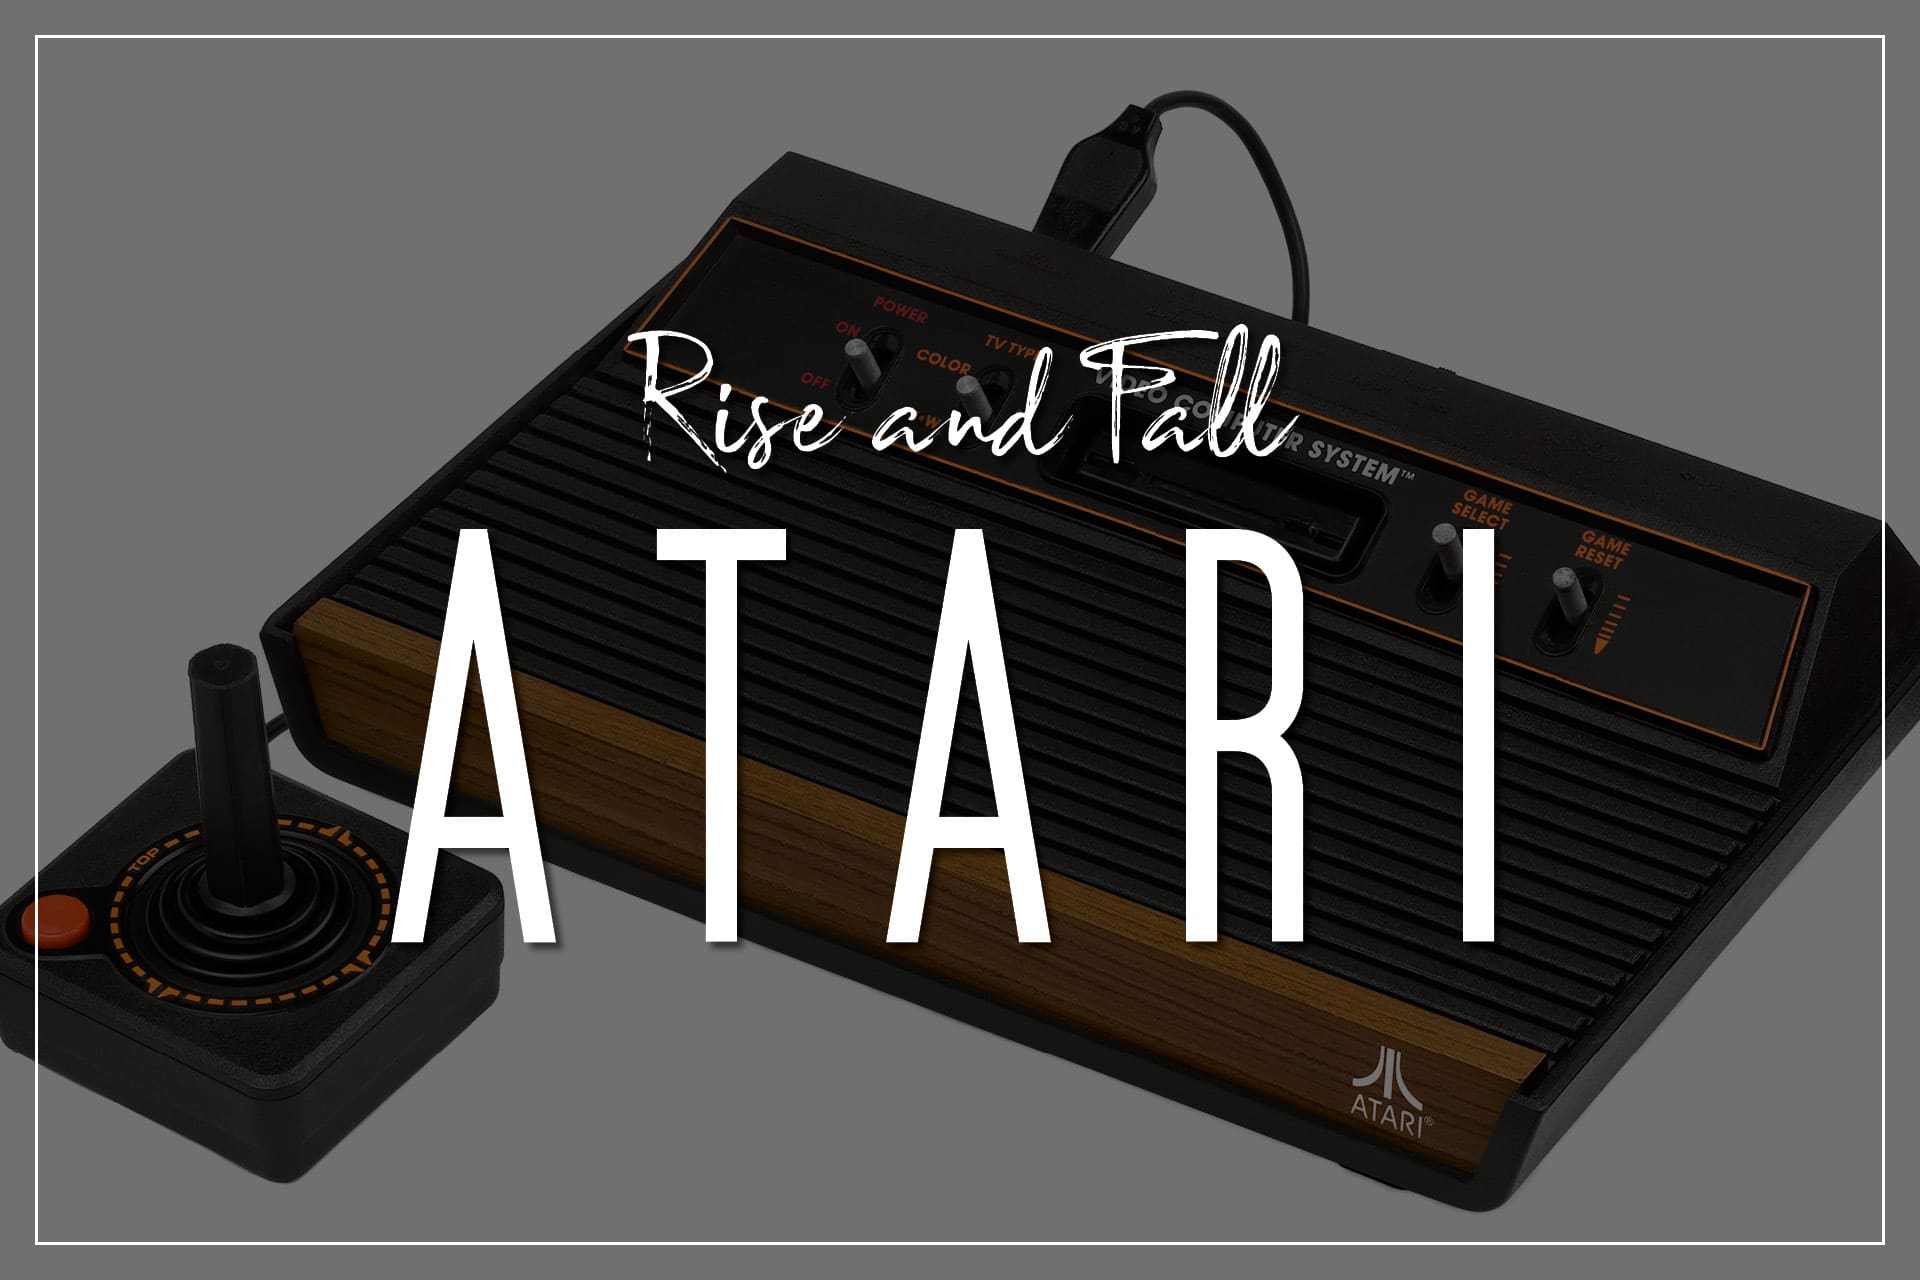 Atari: Rise and Fall